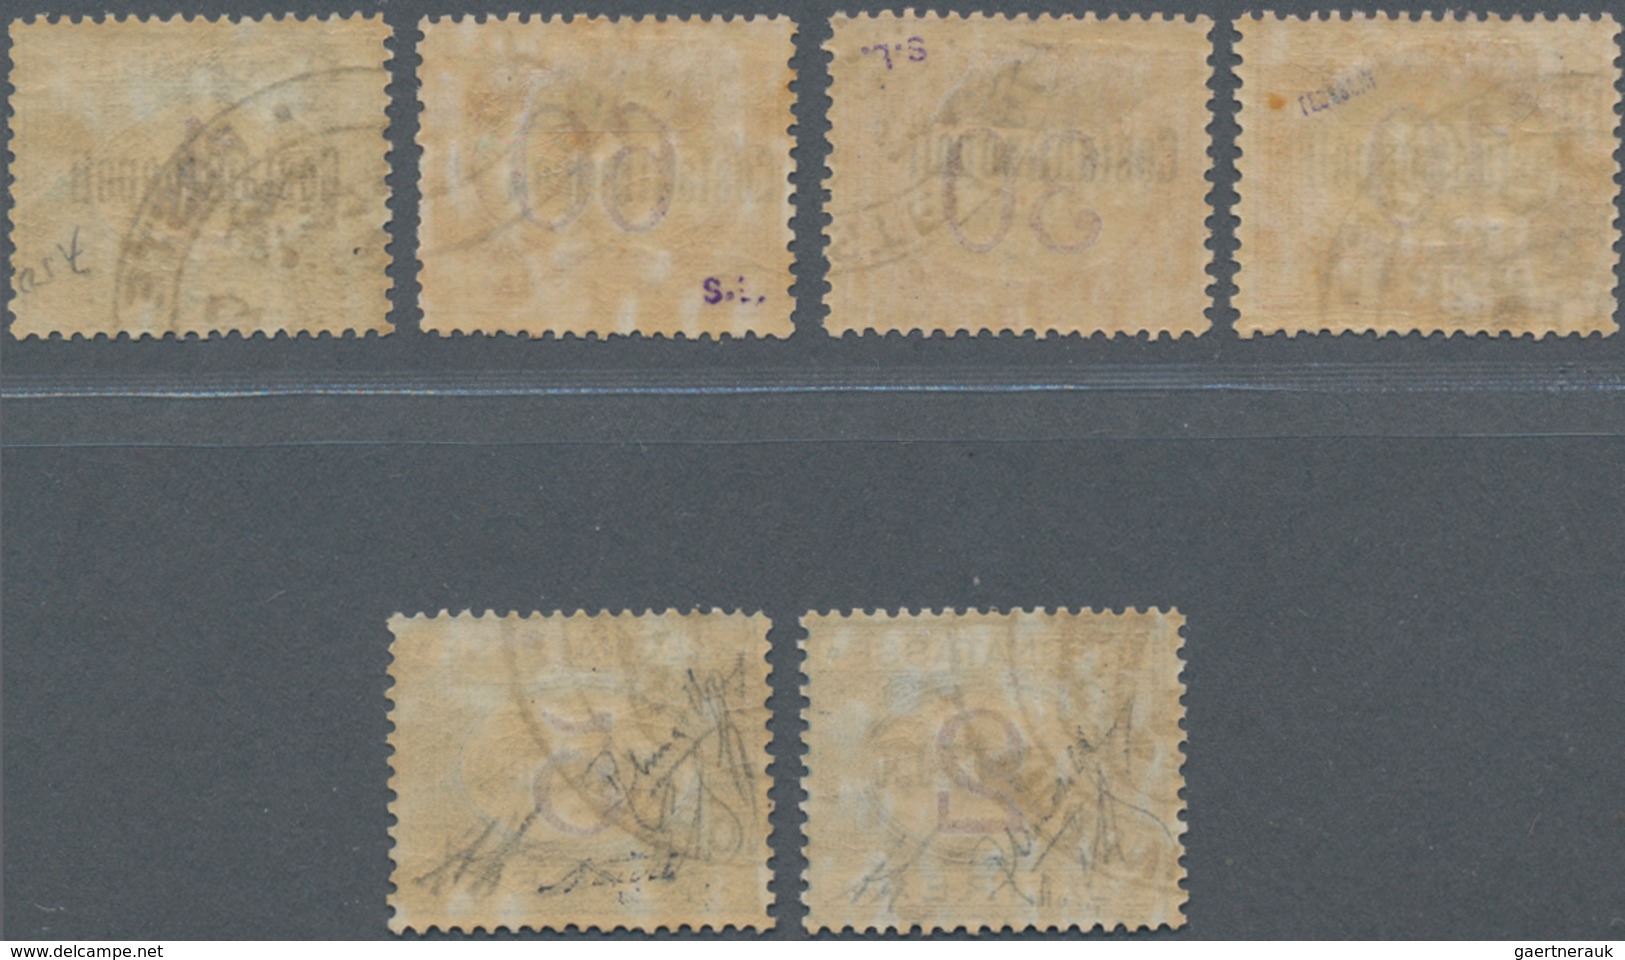 Italienische Post In Der Levante - Portomarken: 1922 Complete Set Of The Postage Due Stamps For The - Emisiones Generales